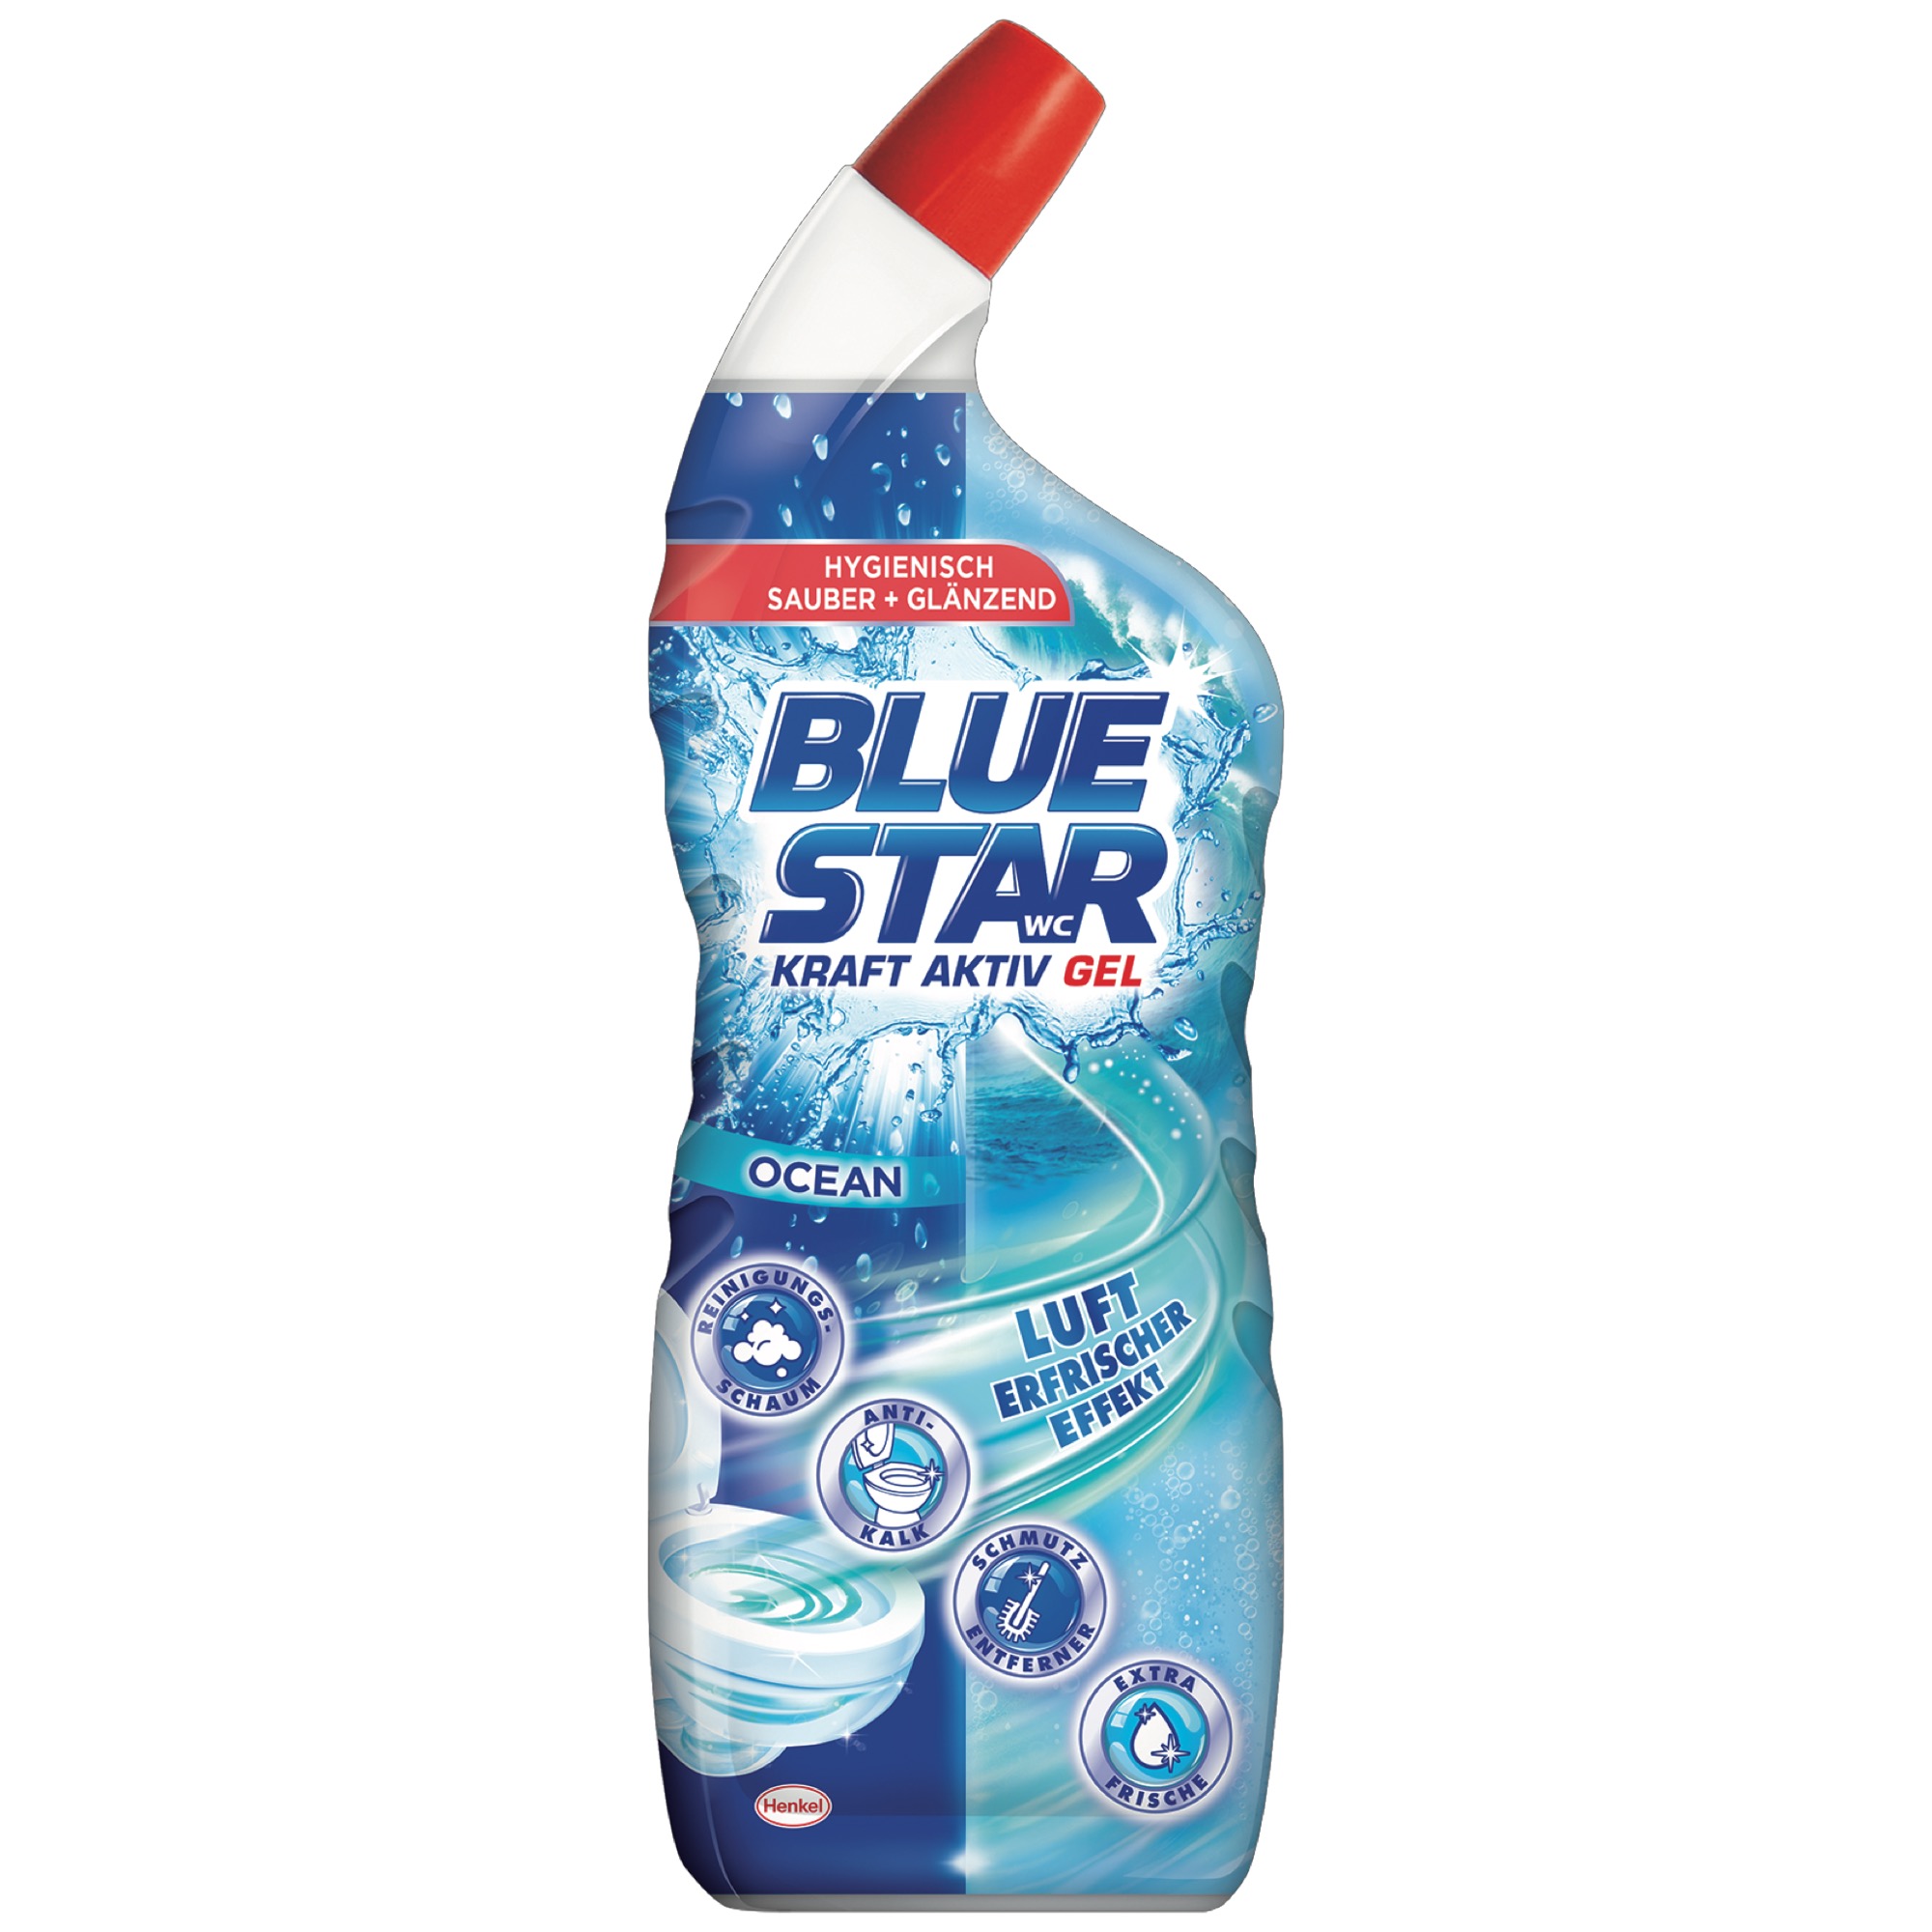 Blue Star Kraft Akt.Gel 700ml, Ocean